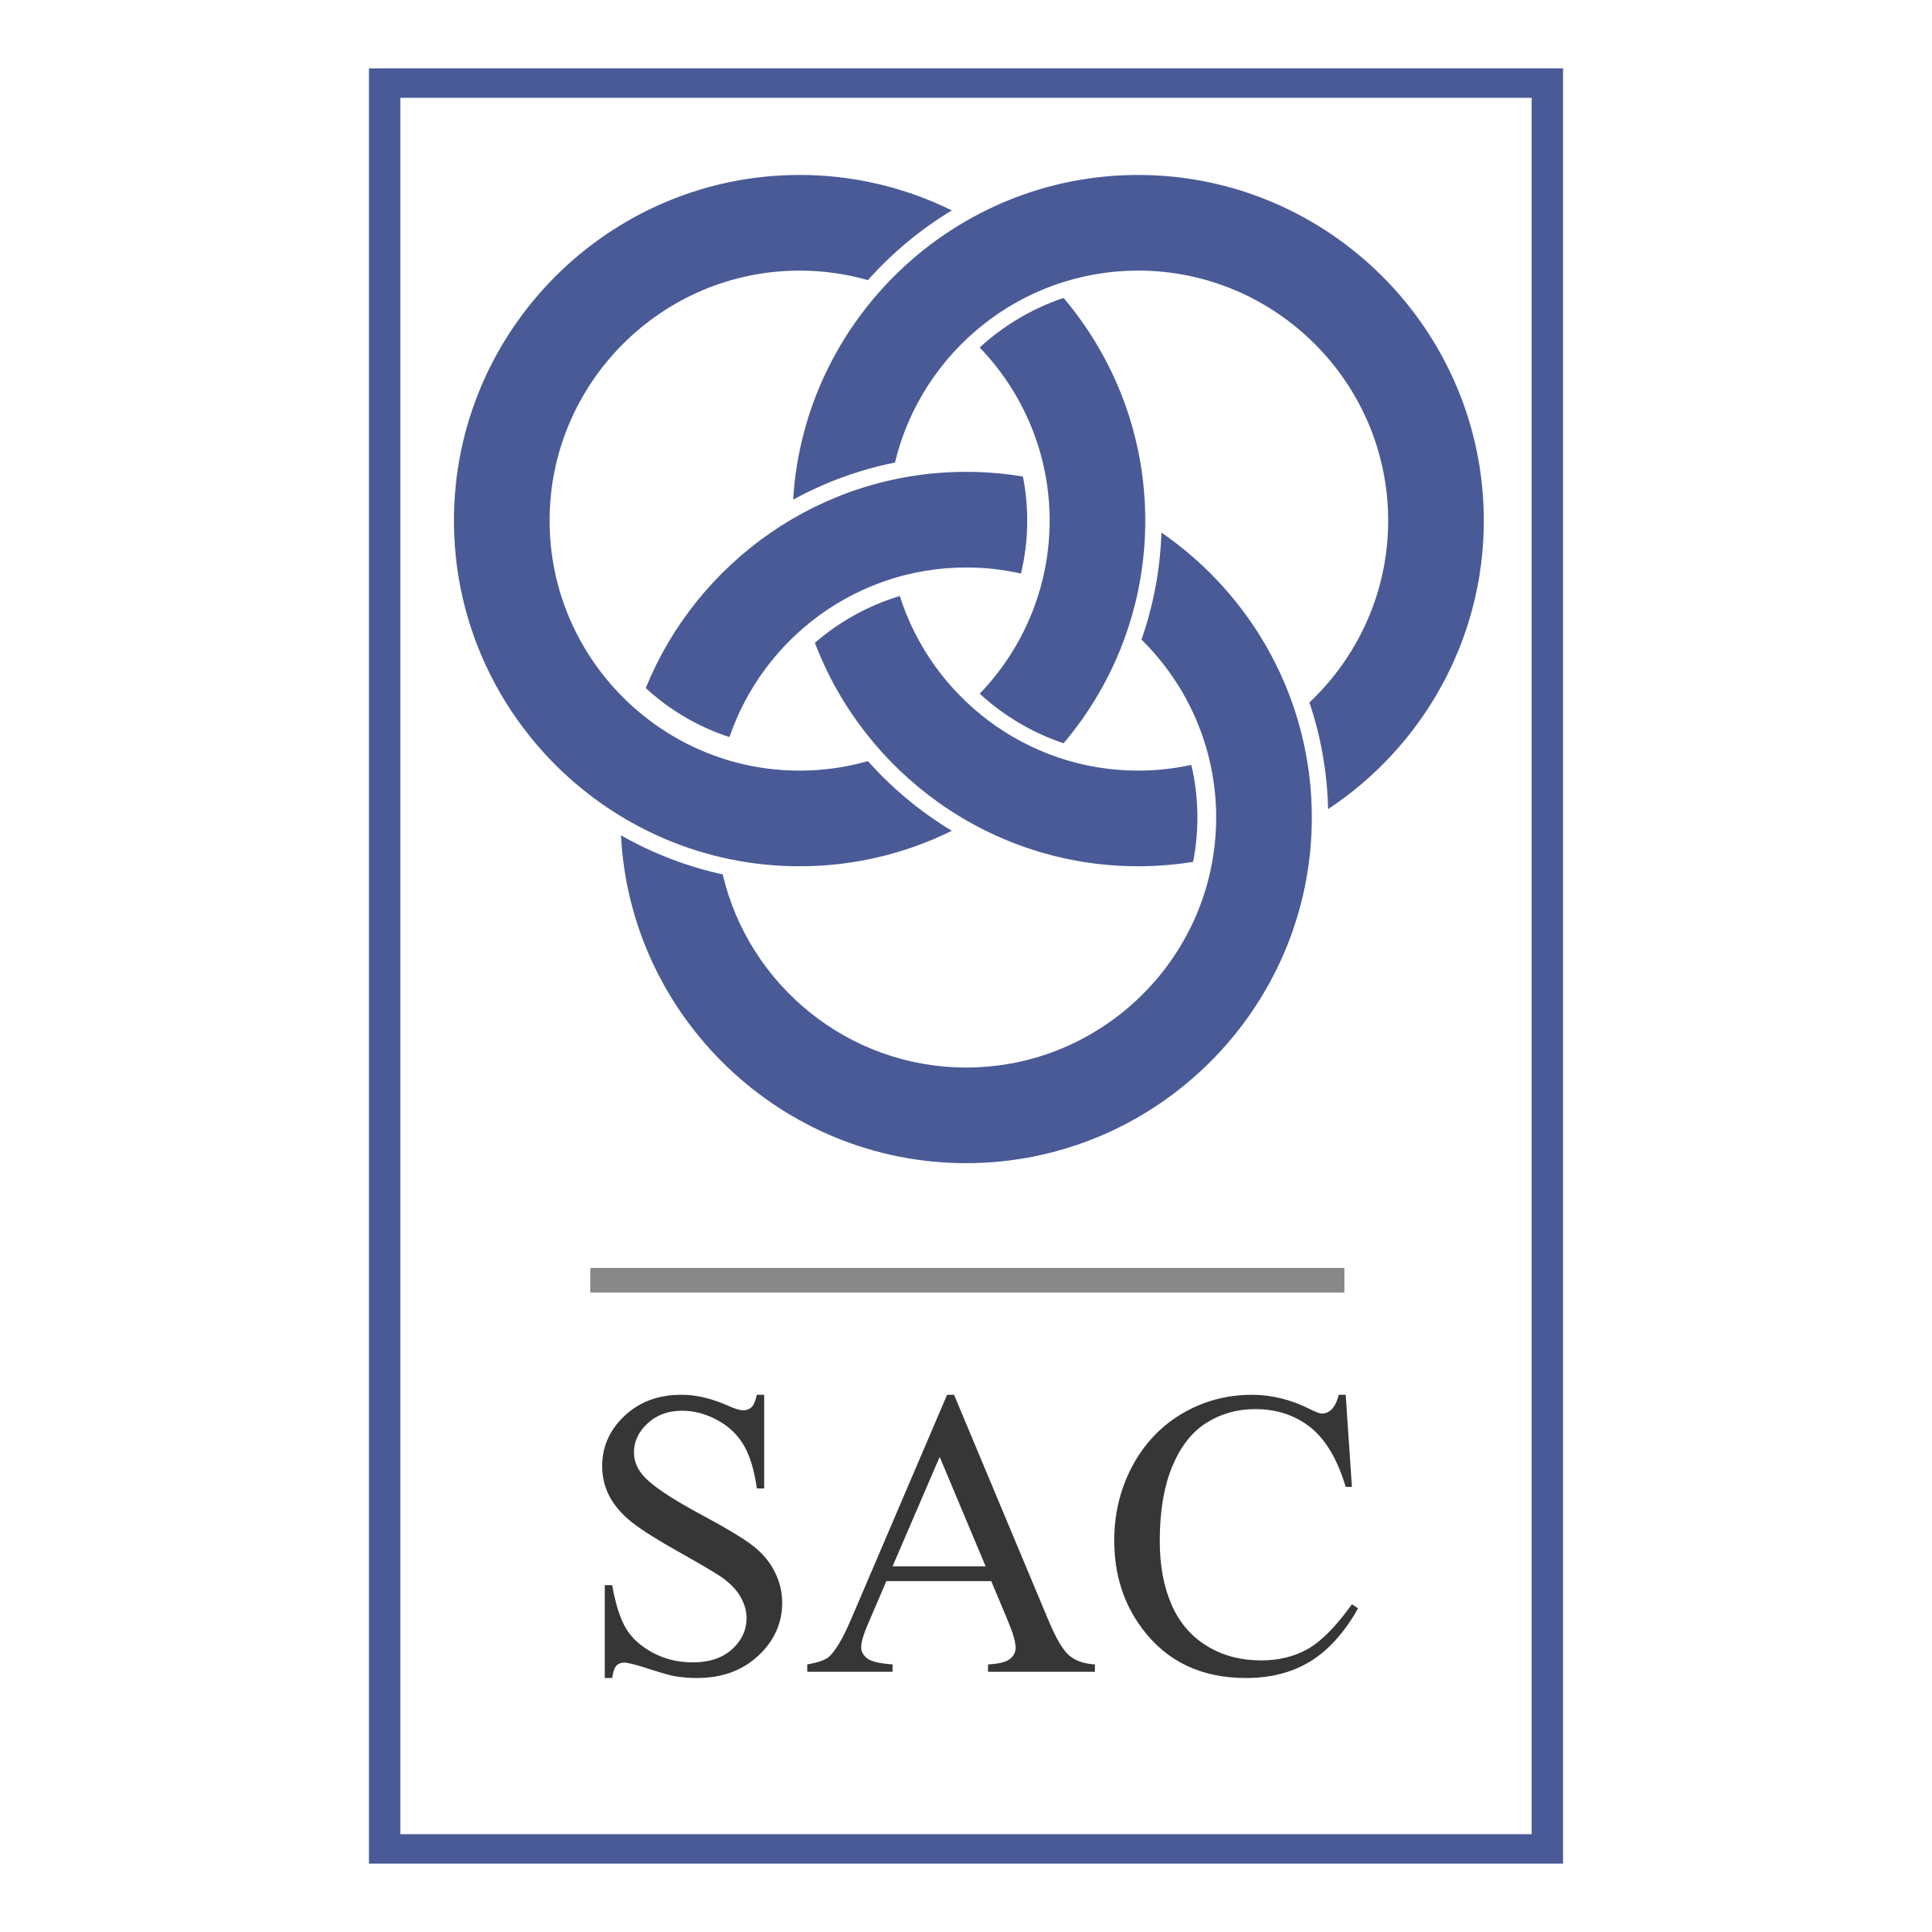 Sac Logo - SAC Logo PNG Transparent & SVG Vector - Freebie Supply